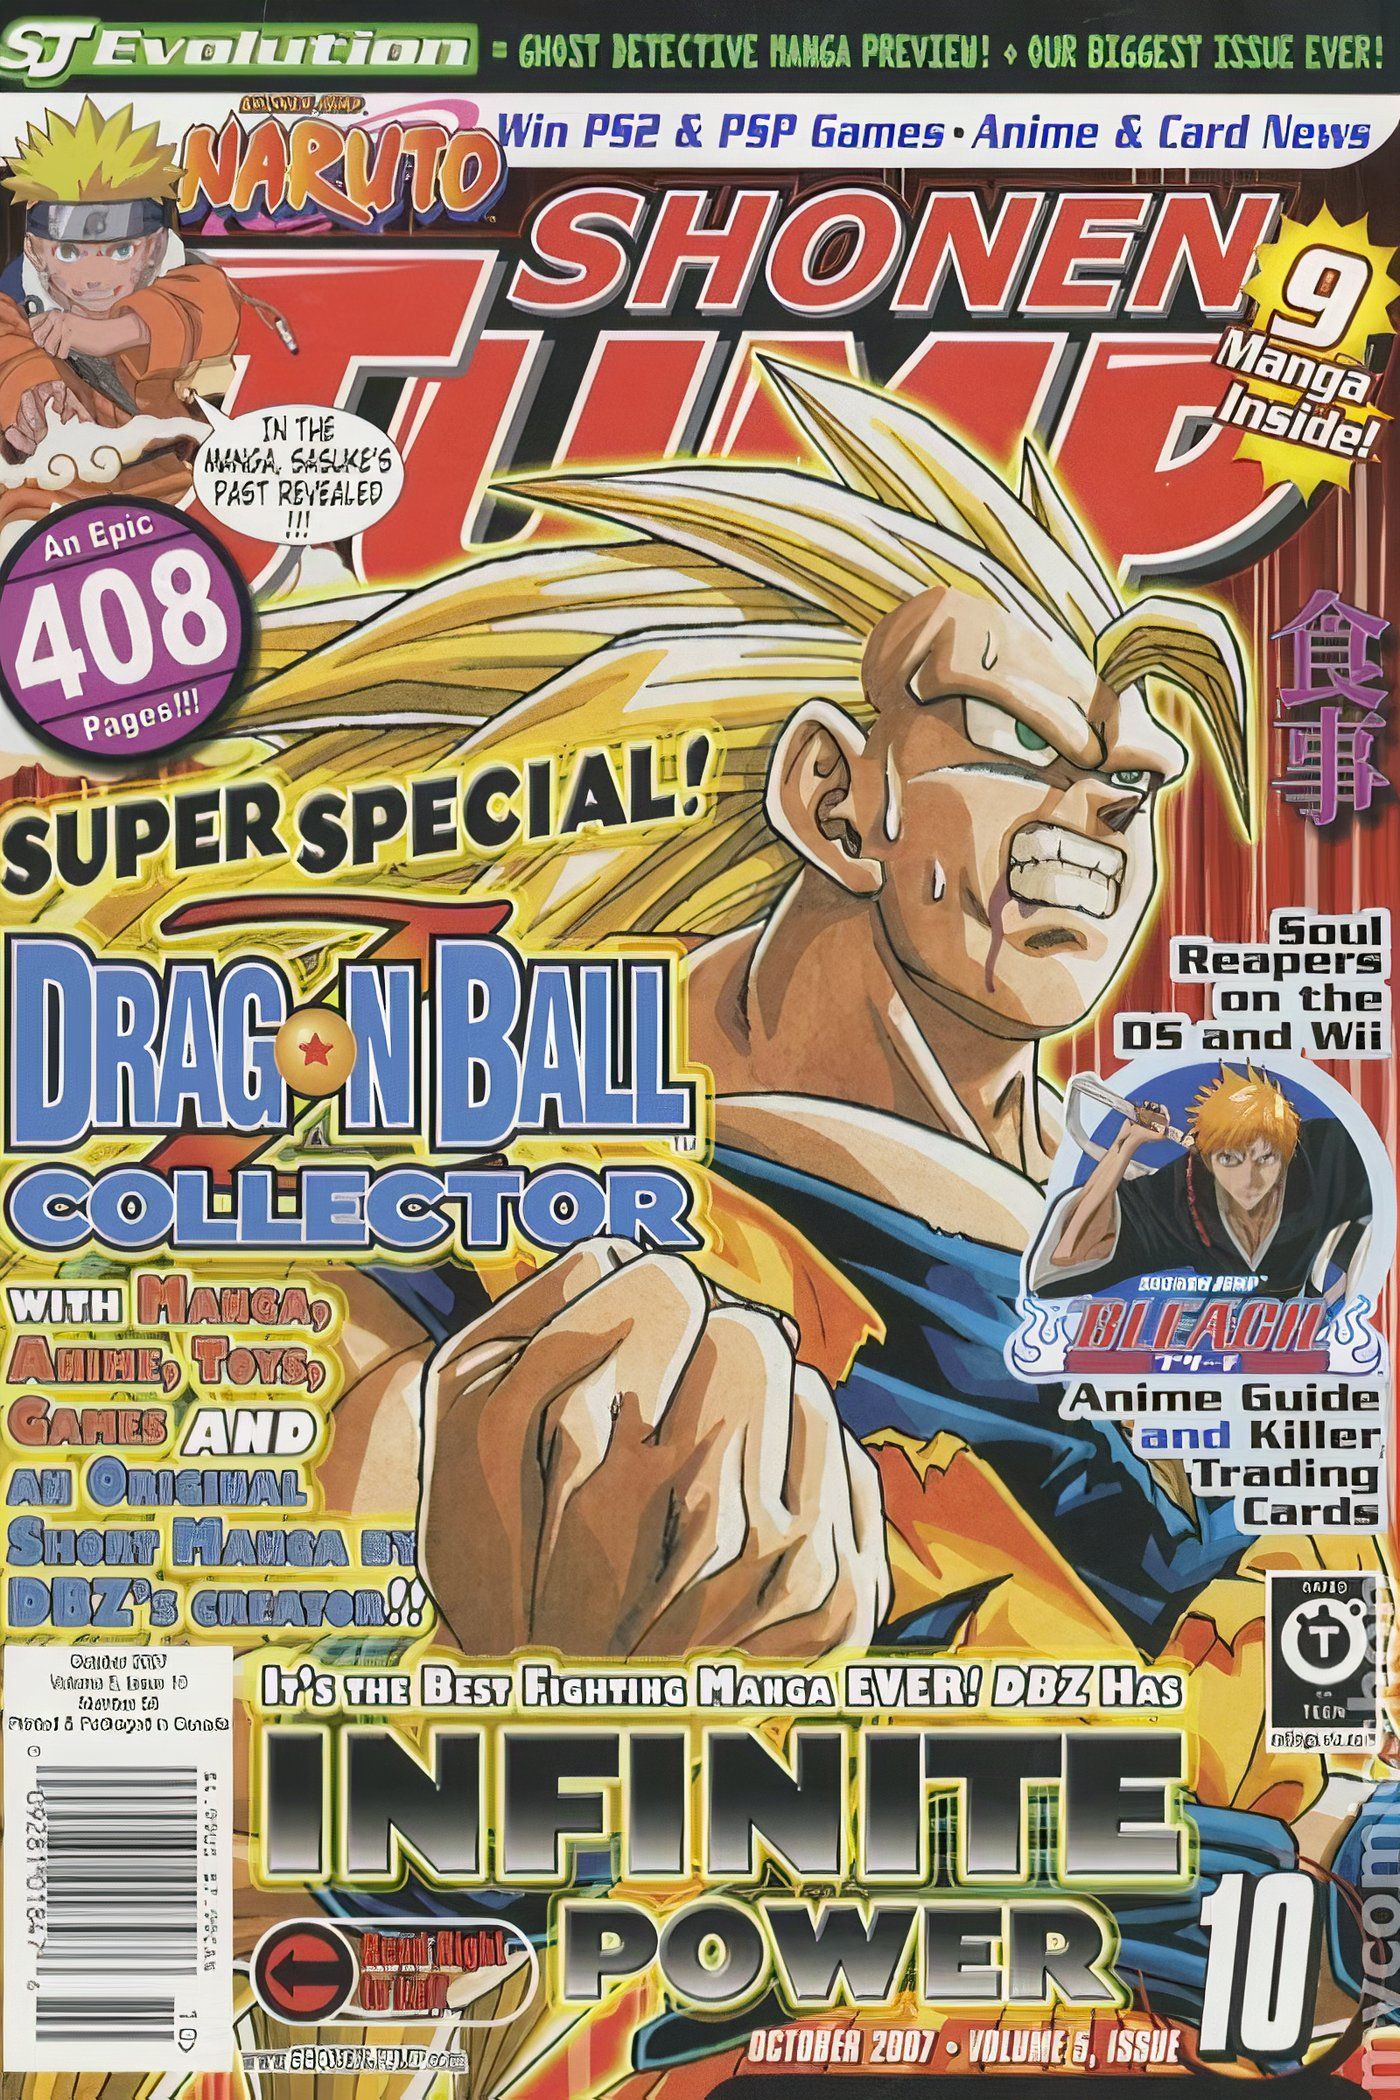 American Weekly Shonen Jump 58 Editado apresentando super saiyan 3 Goku e Ichigo de Bleach